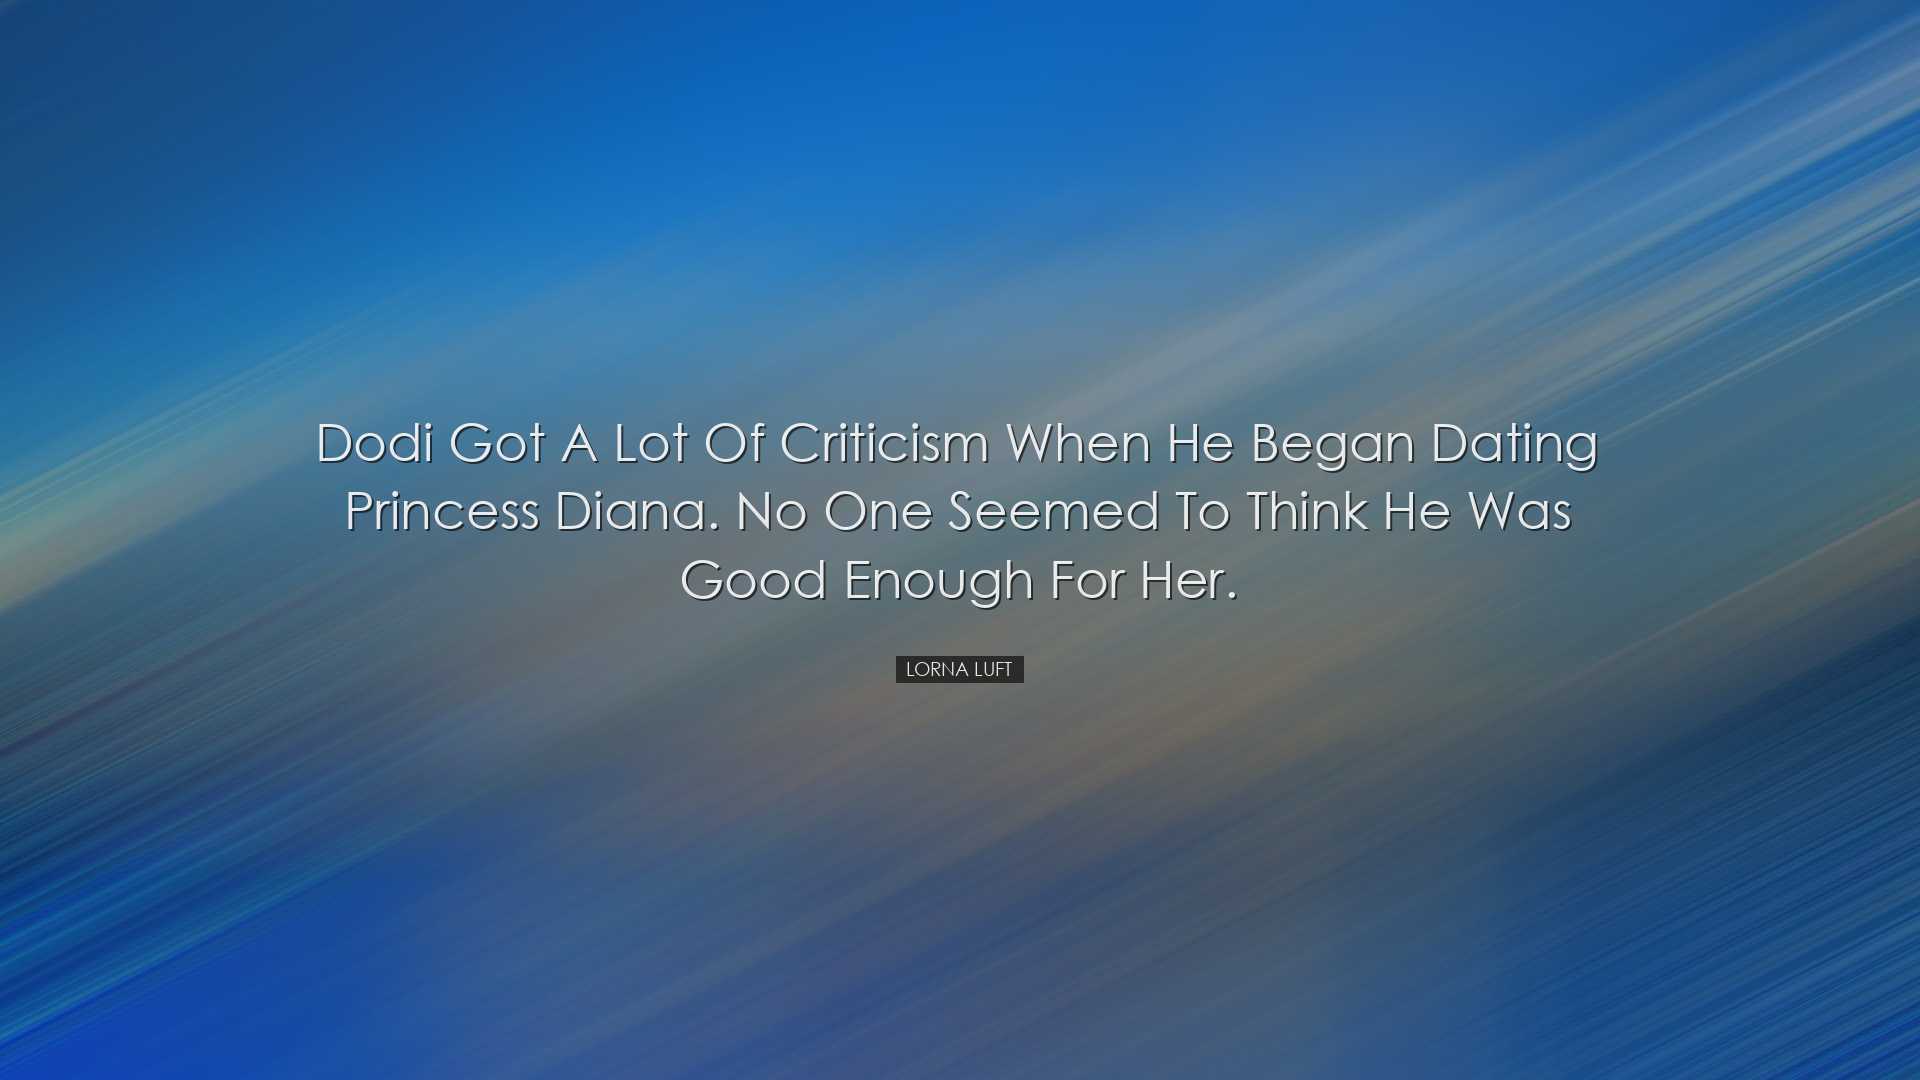 Dodi got a lot of criticism when he began dating Princess Diana. N